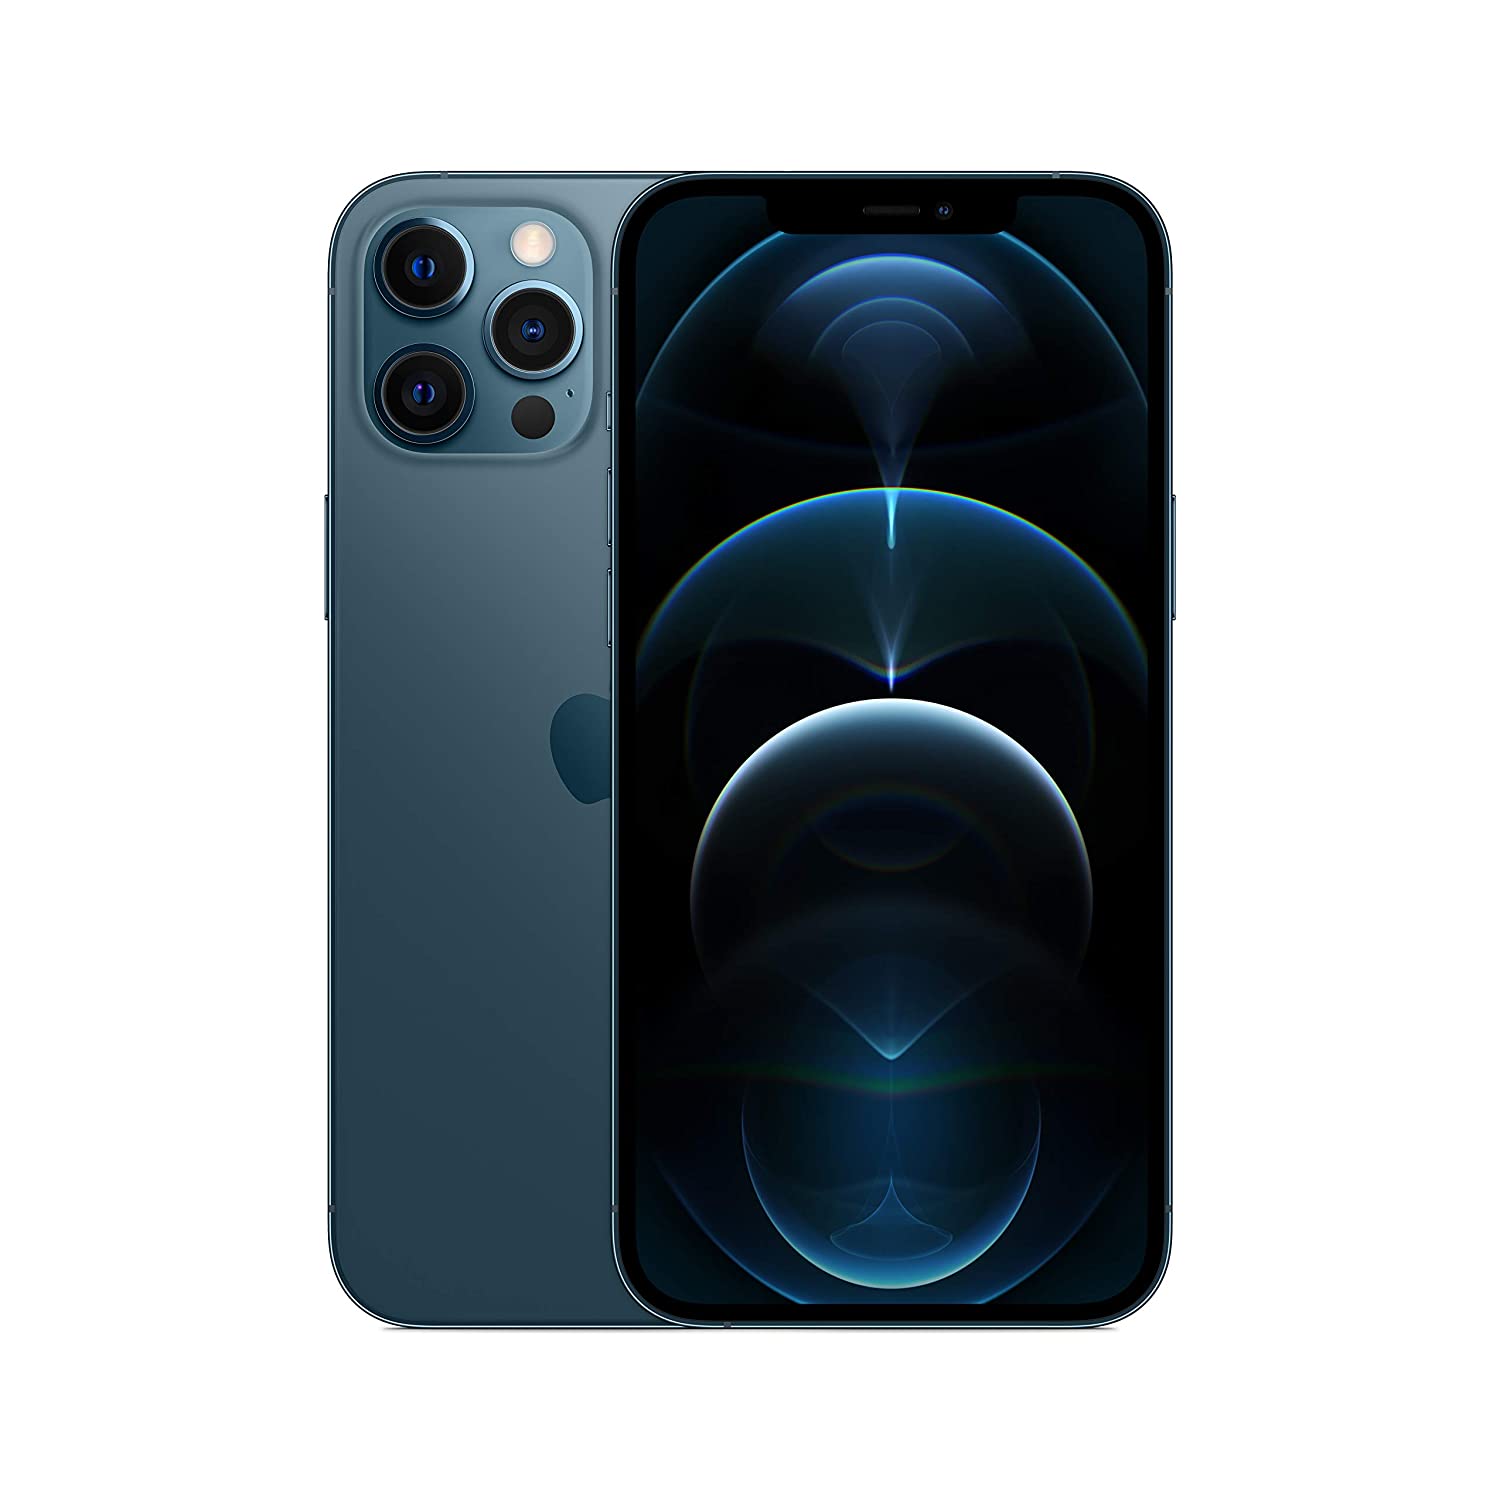 iPhone 12 Pro Max (128GB) - Pacific Blue